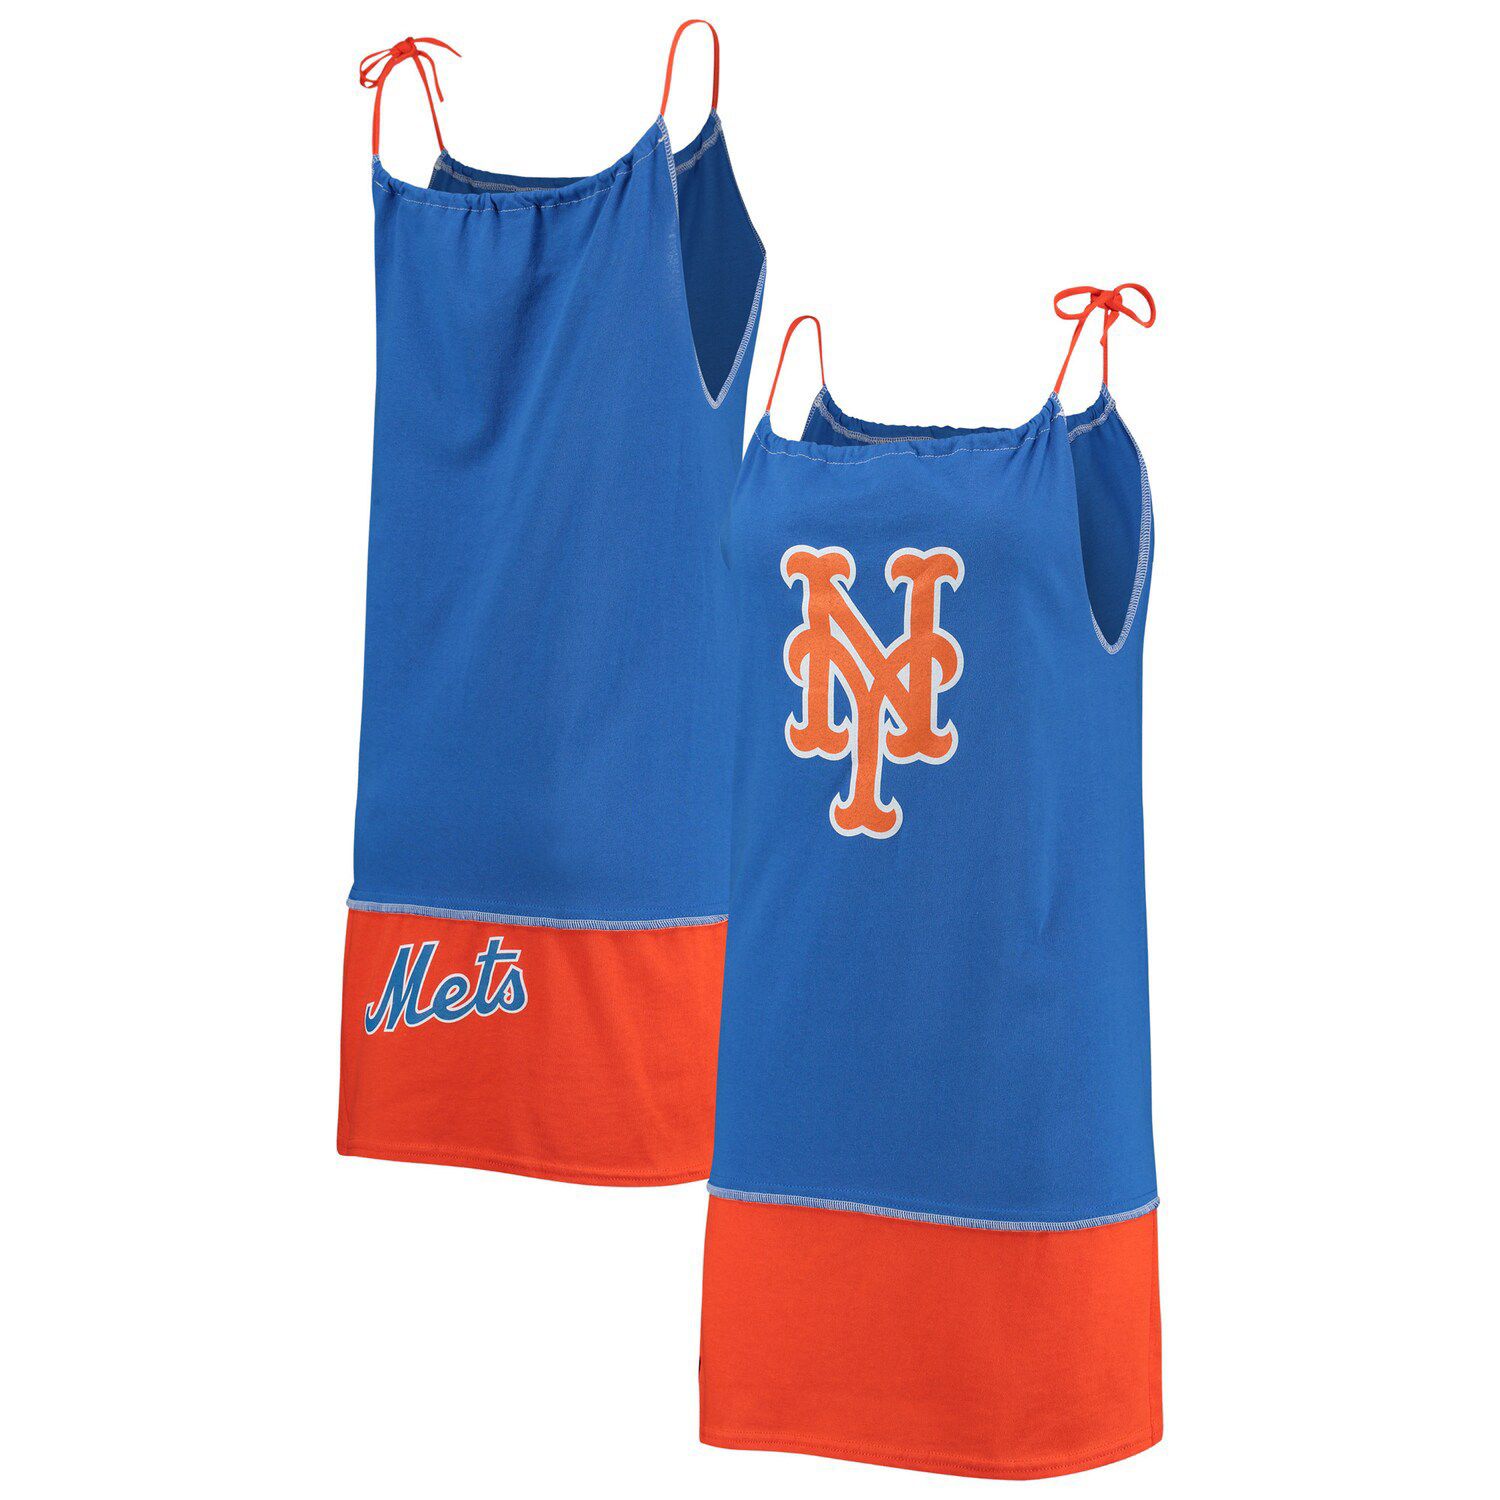 Image for Unbranded Women's Refried Apparel Royal New York Mets Sleeveless Tank Dress at Kohl's.